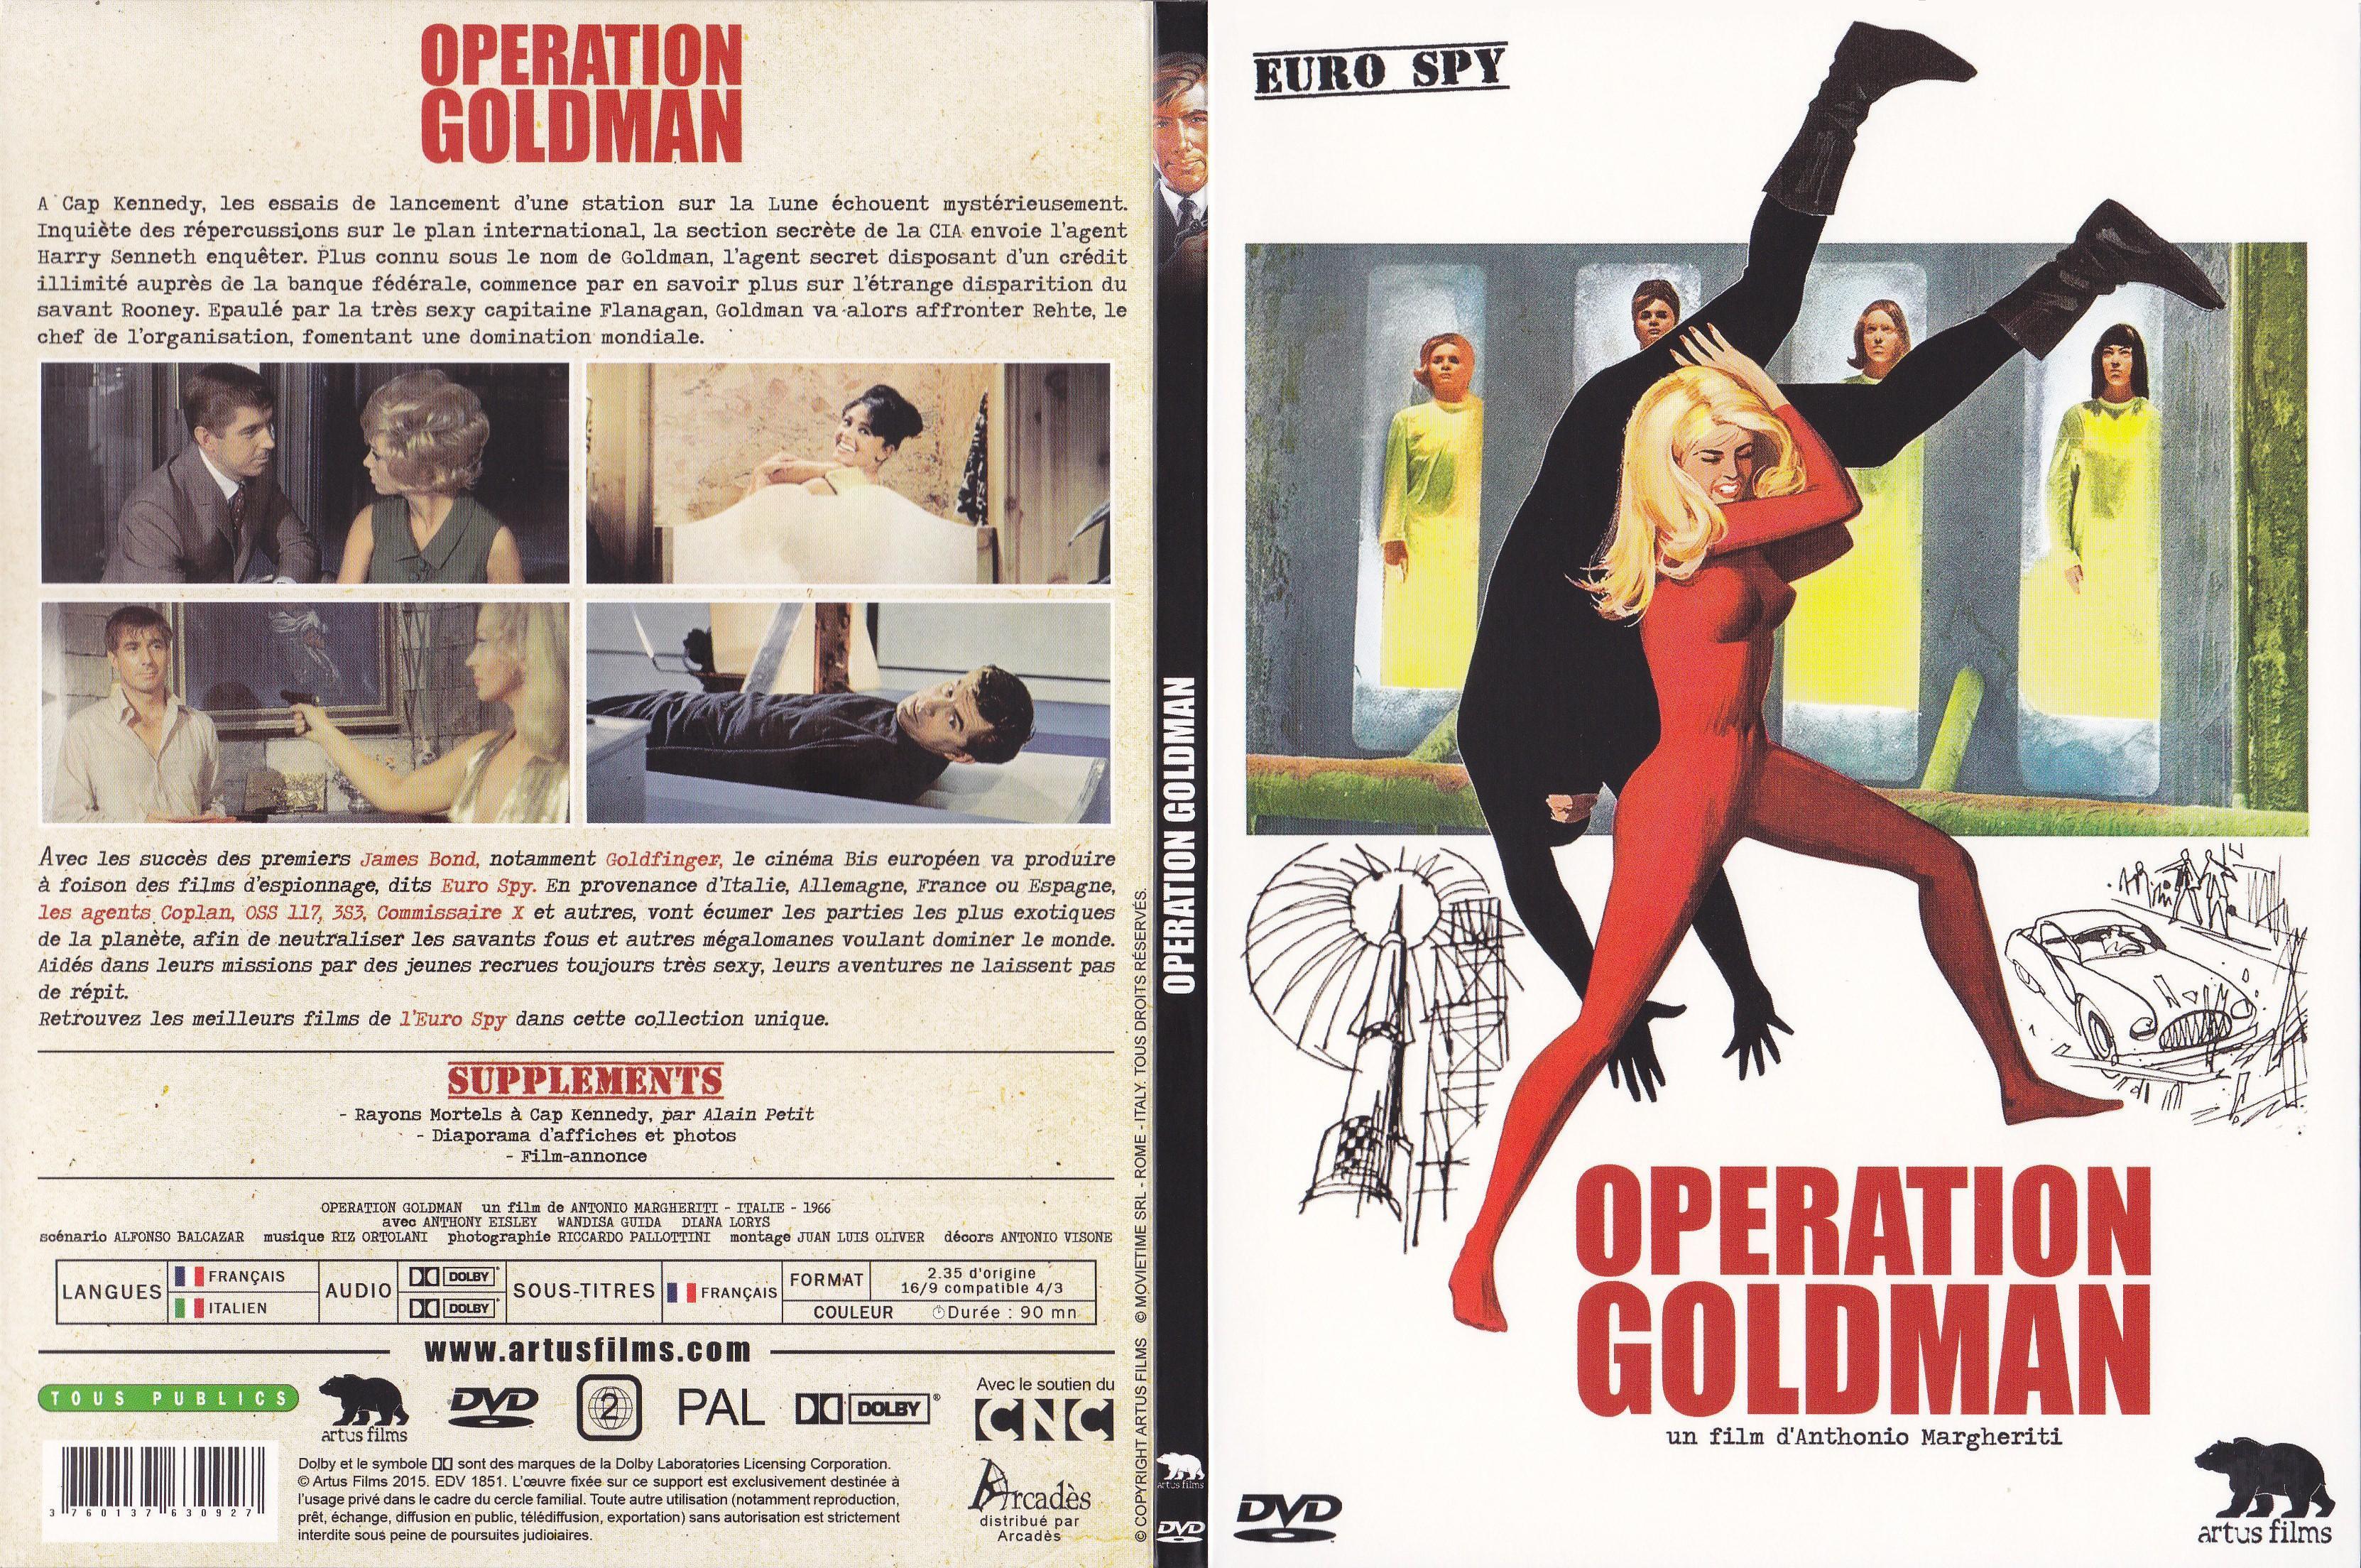 Jaquette DVD Opration Goldman